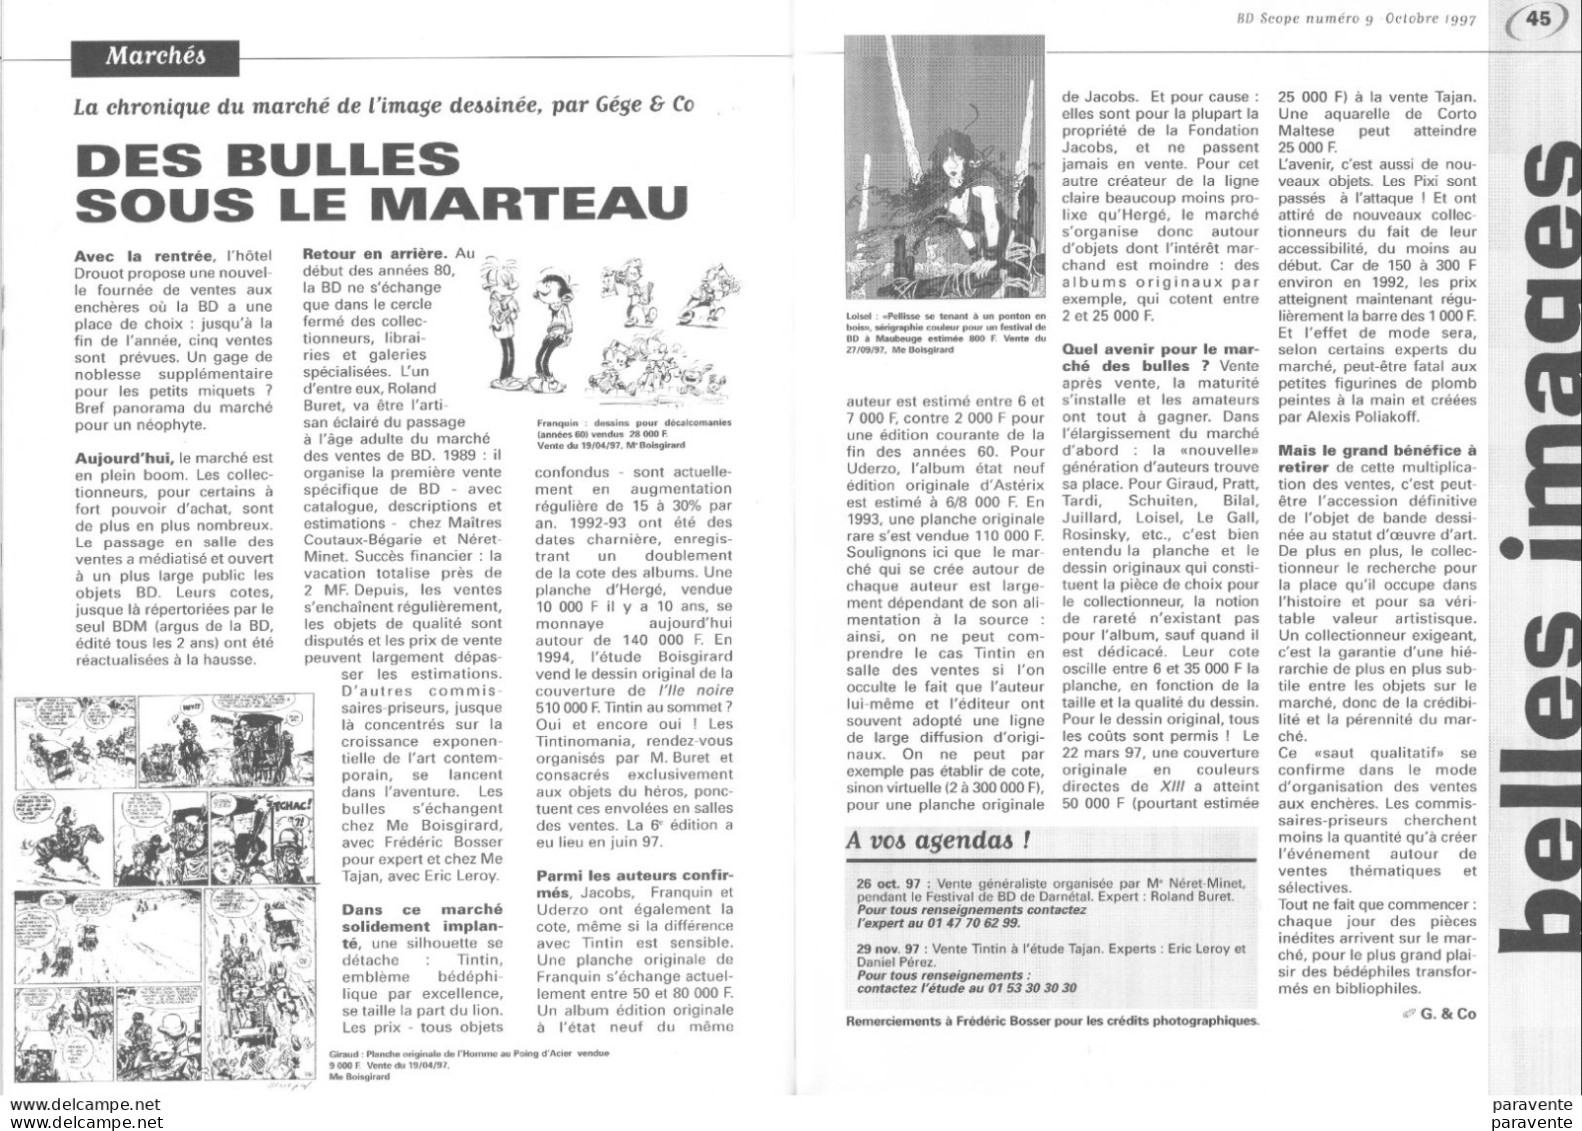 magazine BDSCOPE 9 1997 avec GIRAUD tardi vicomte loisel dupuy berberian franquin